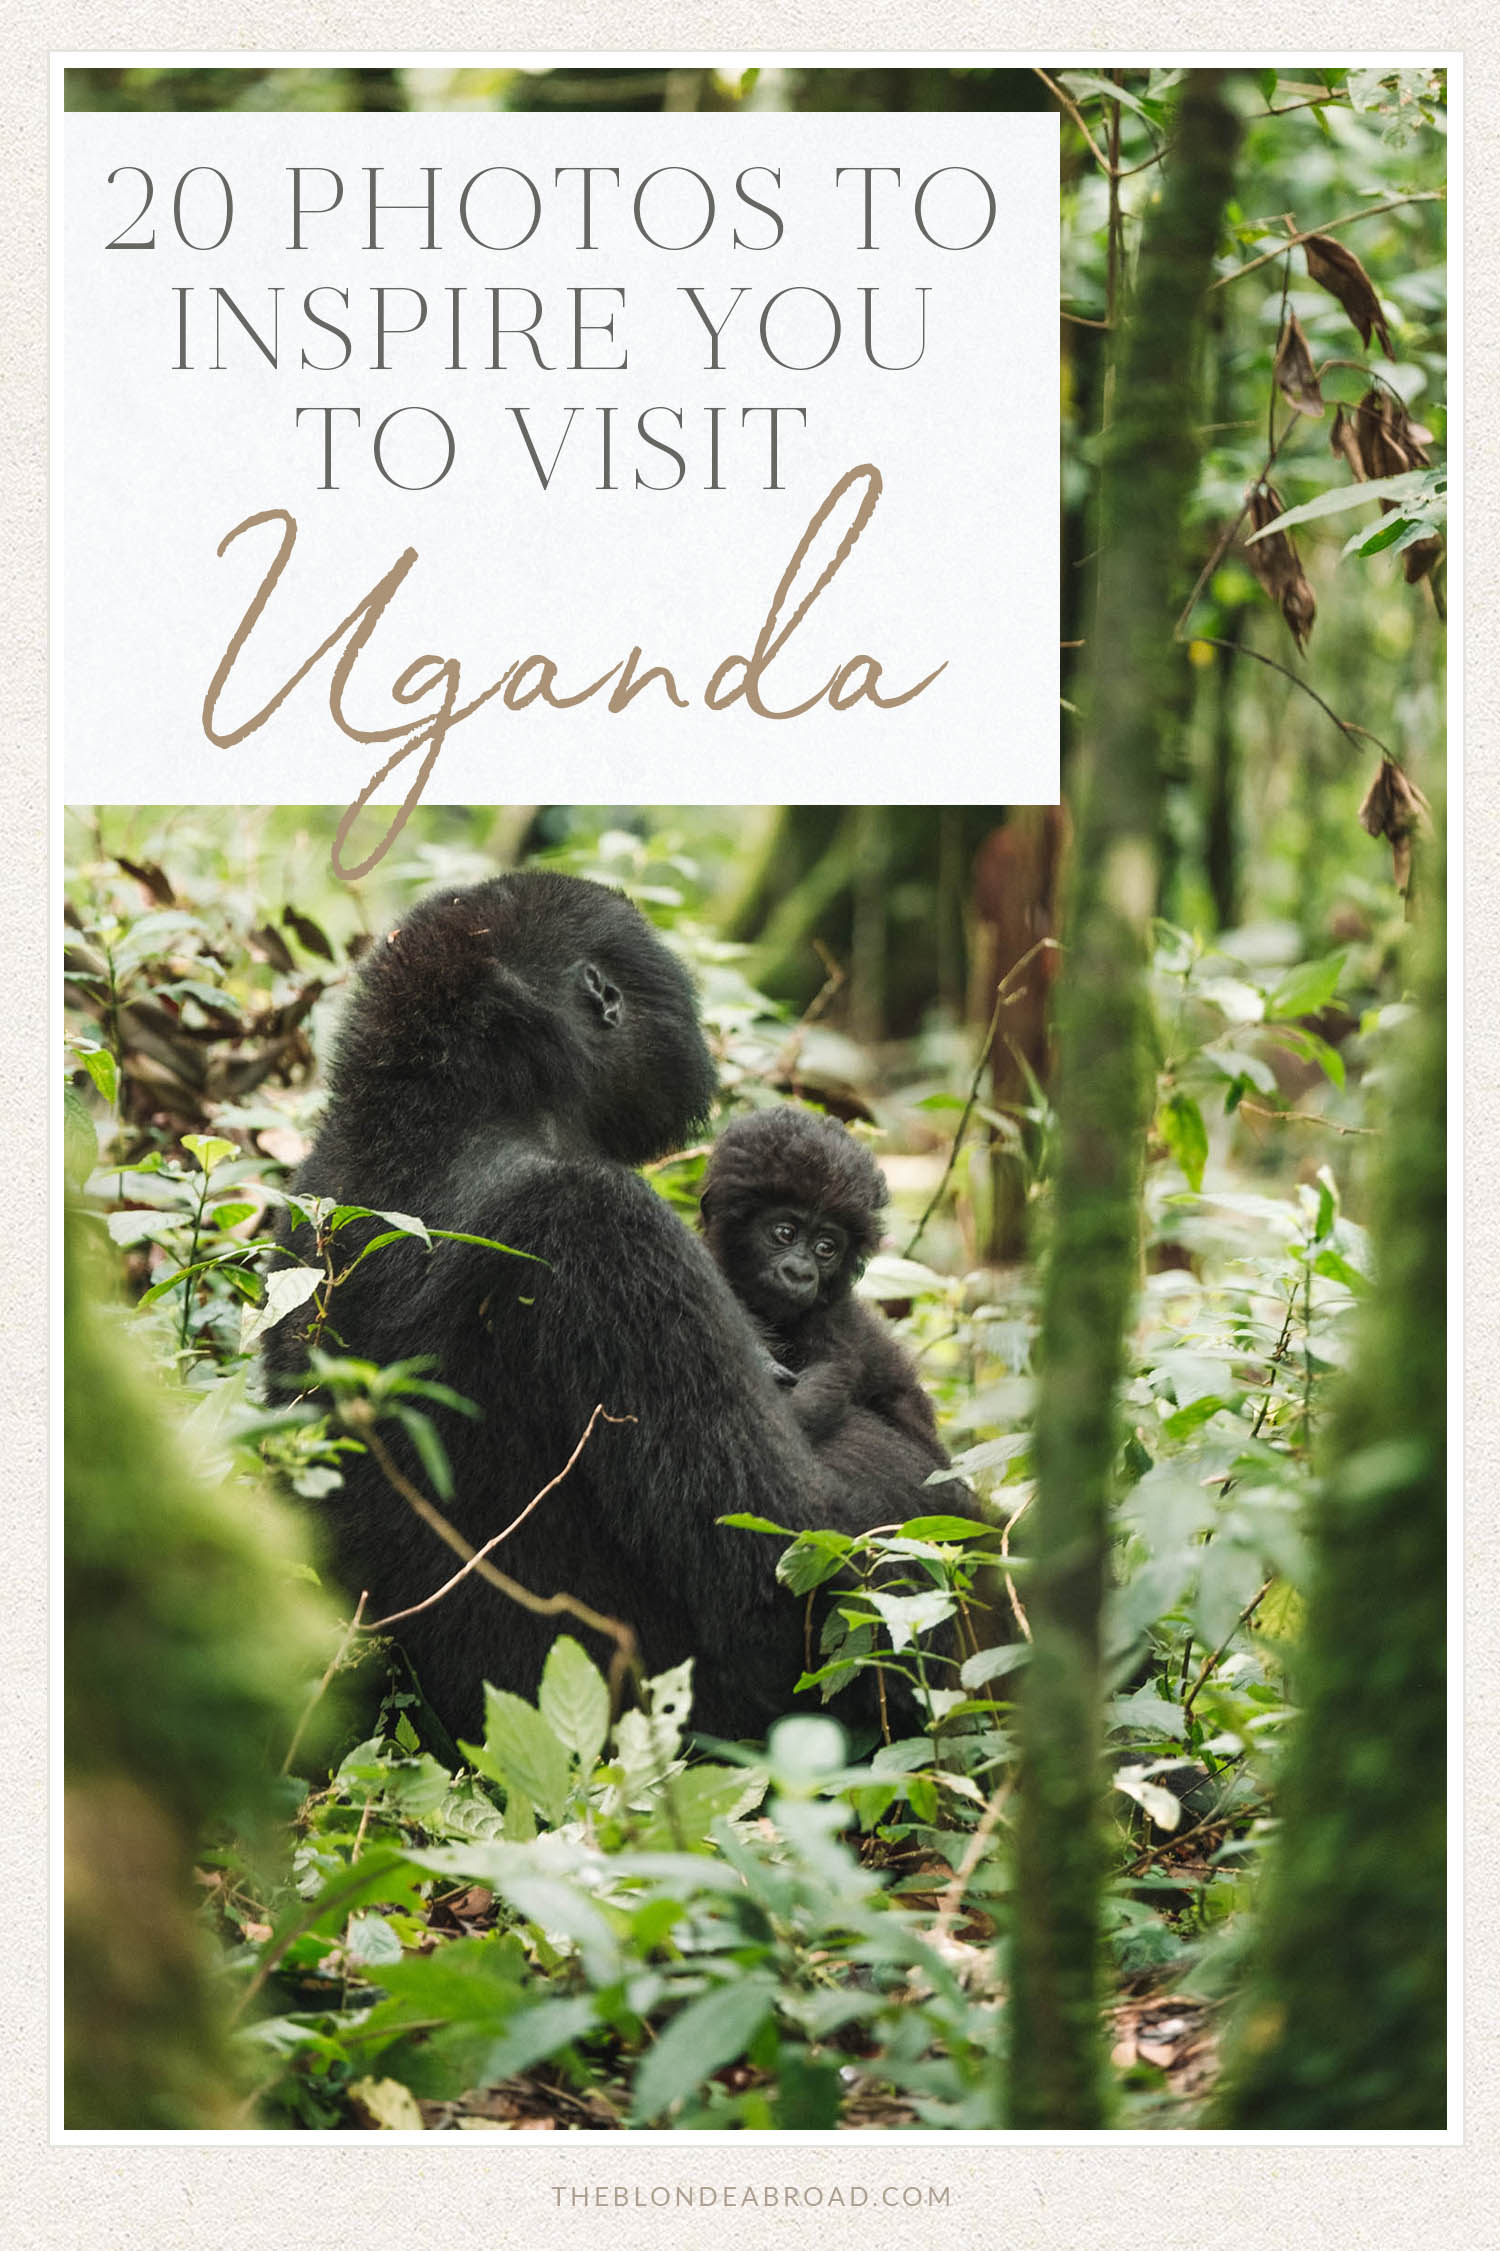 20 Photos to Inspire You to Visit Uganda Gorillas